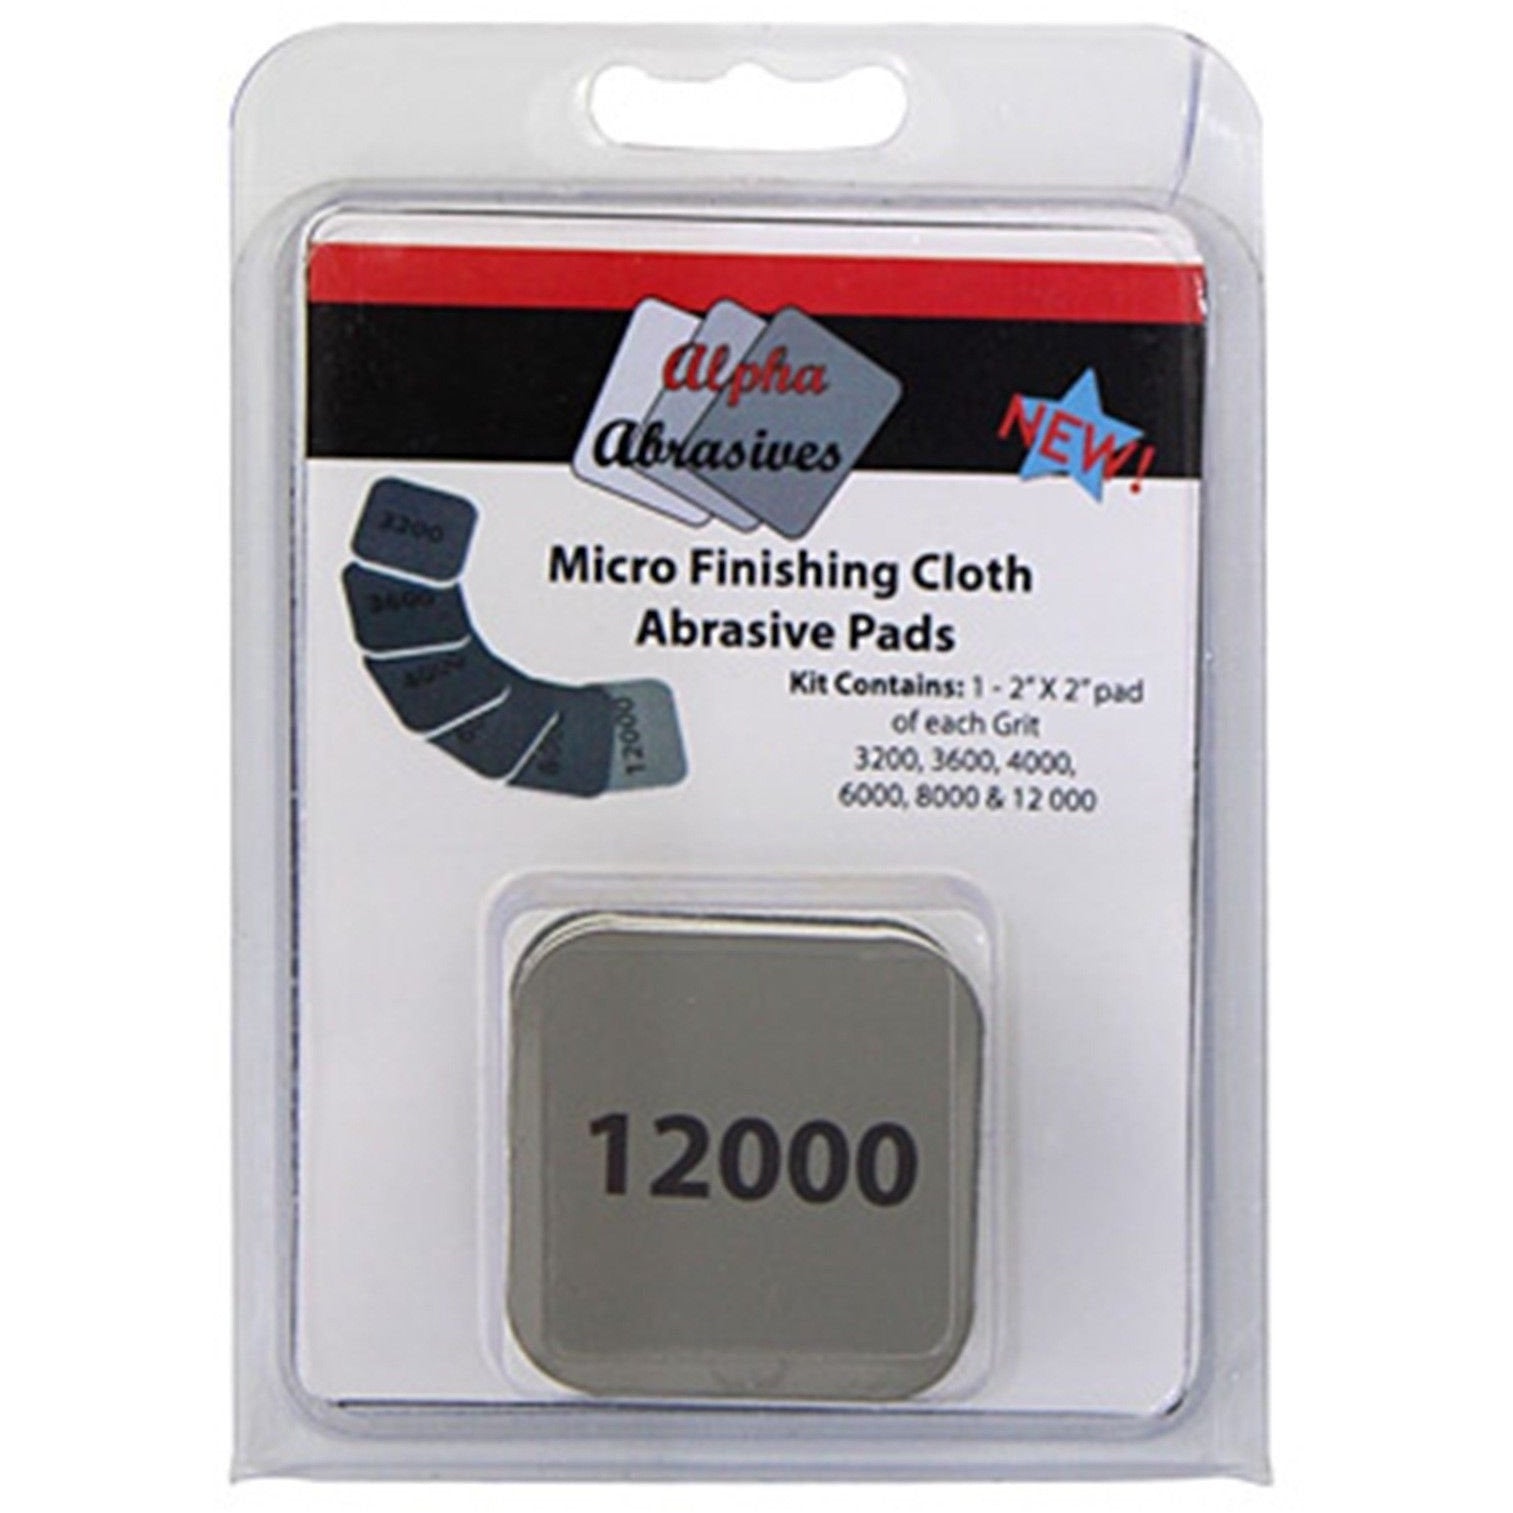 Alpha Abrasives Micro Finishing Cloth Abrasive Pads ALP2000